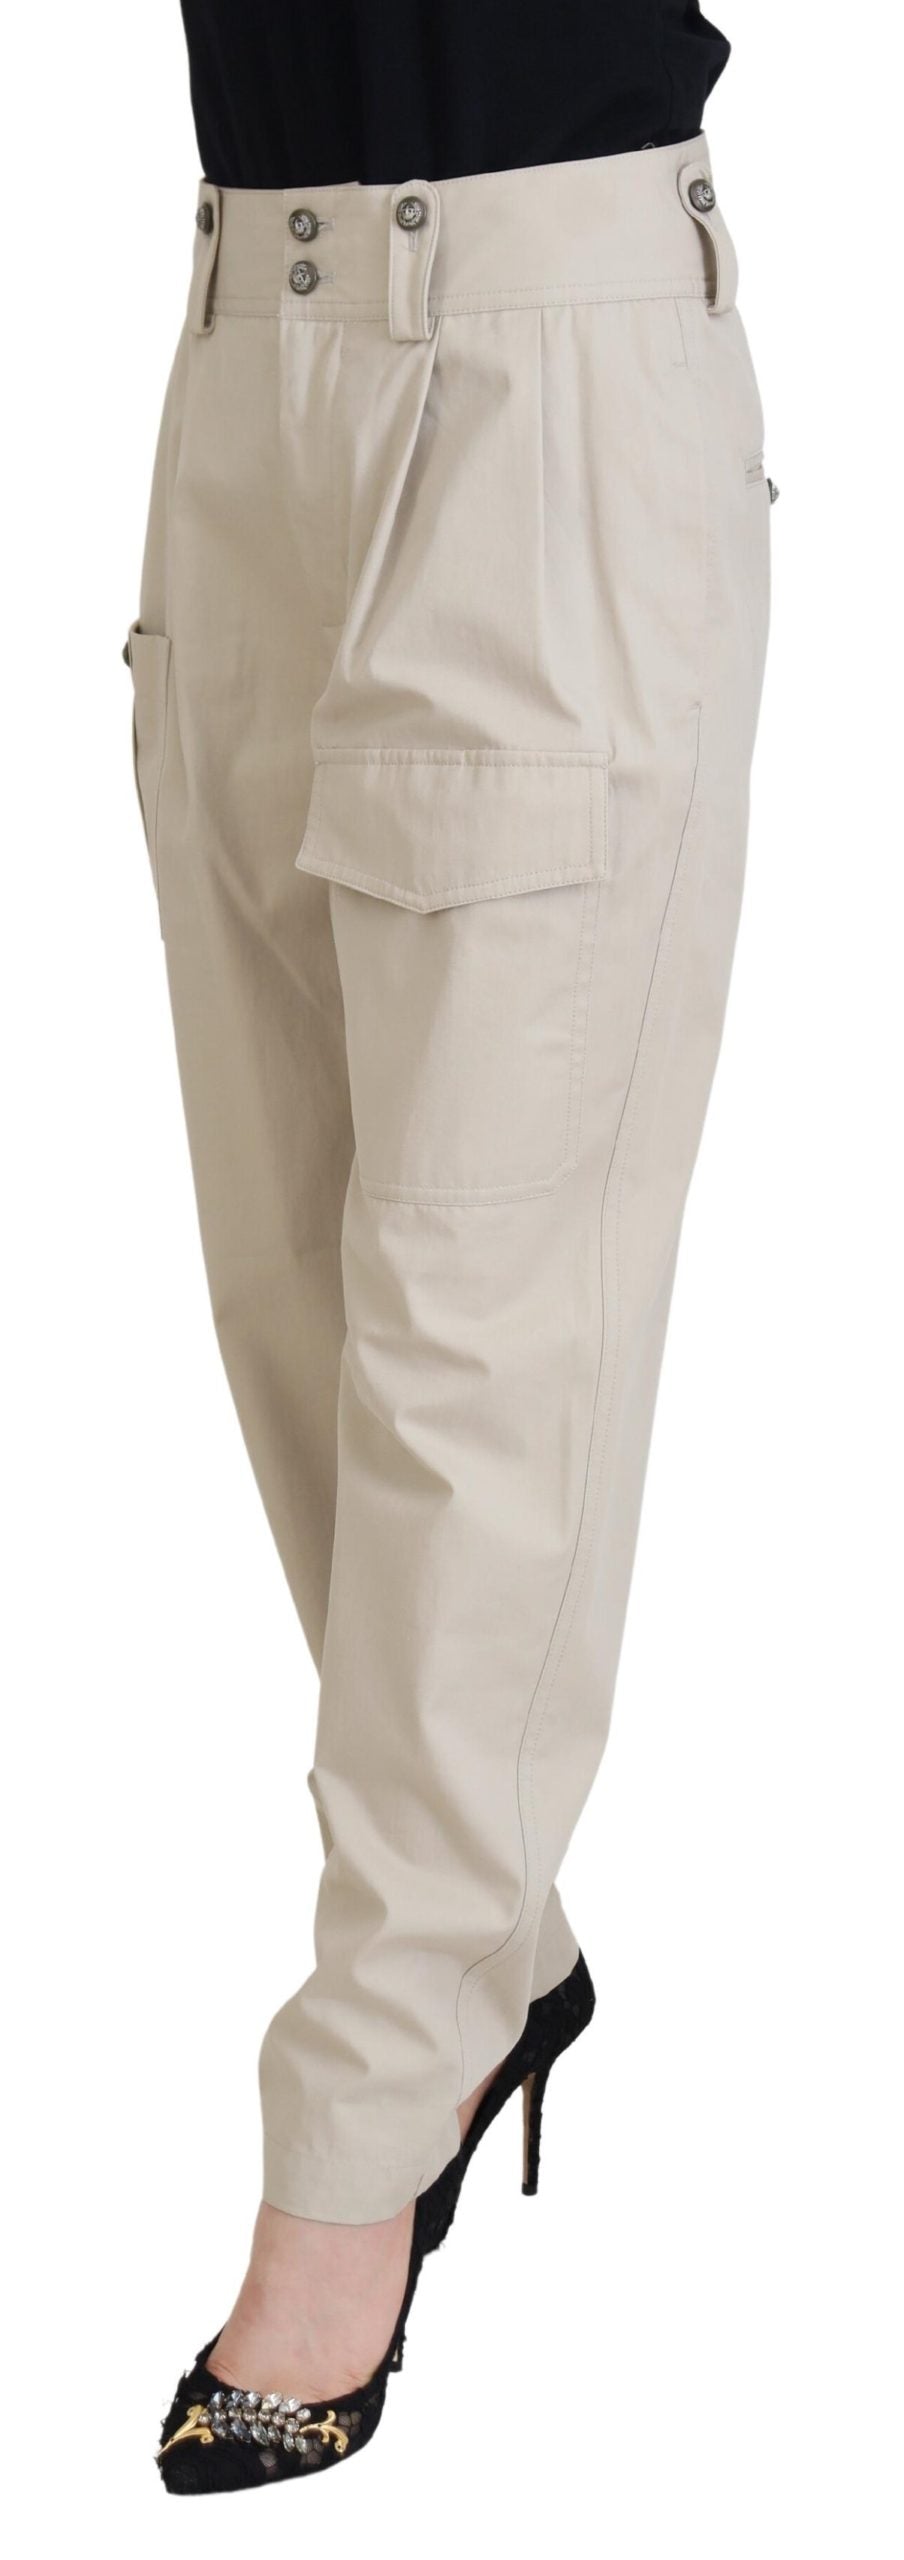 Designer cargo pants by consilio-wears - High Waist Pants - Afrikrea